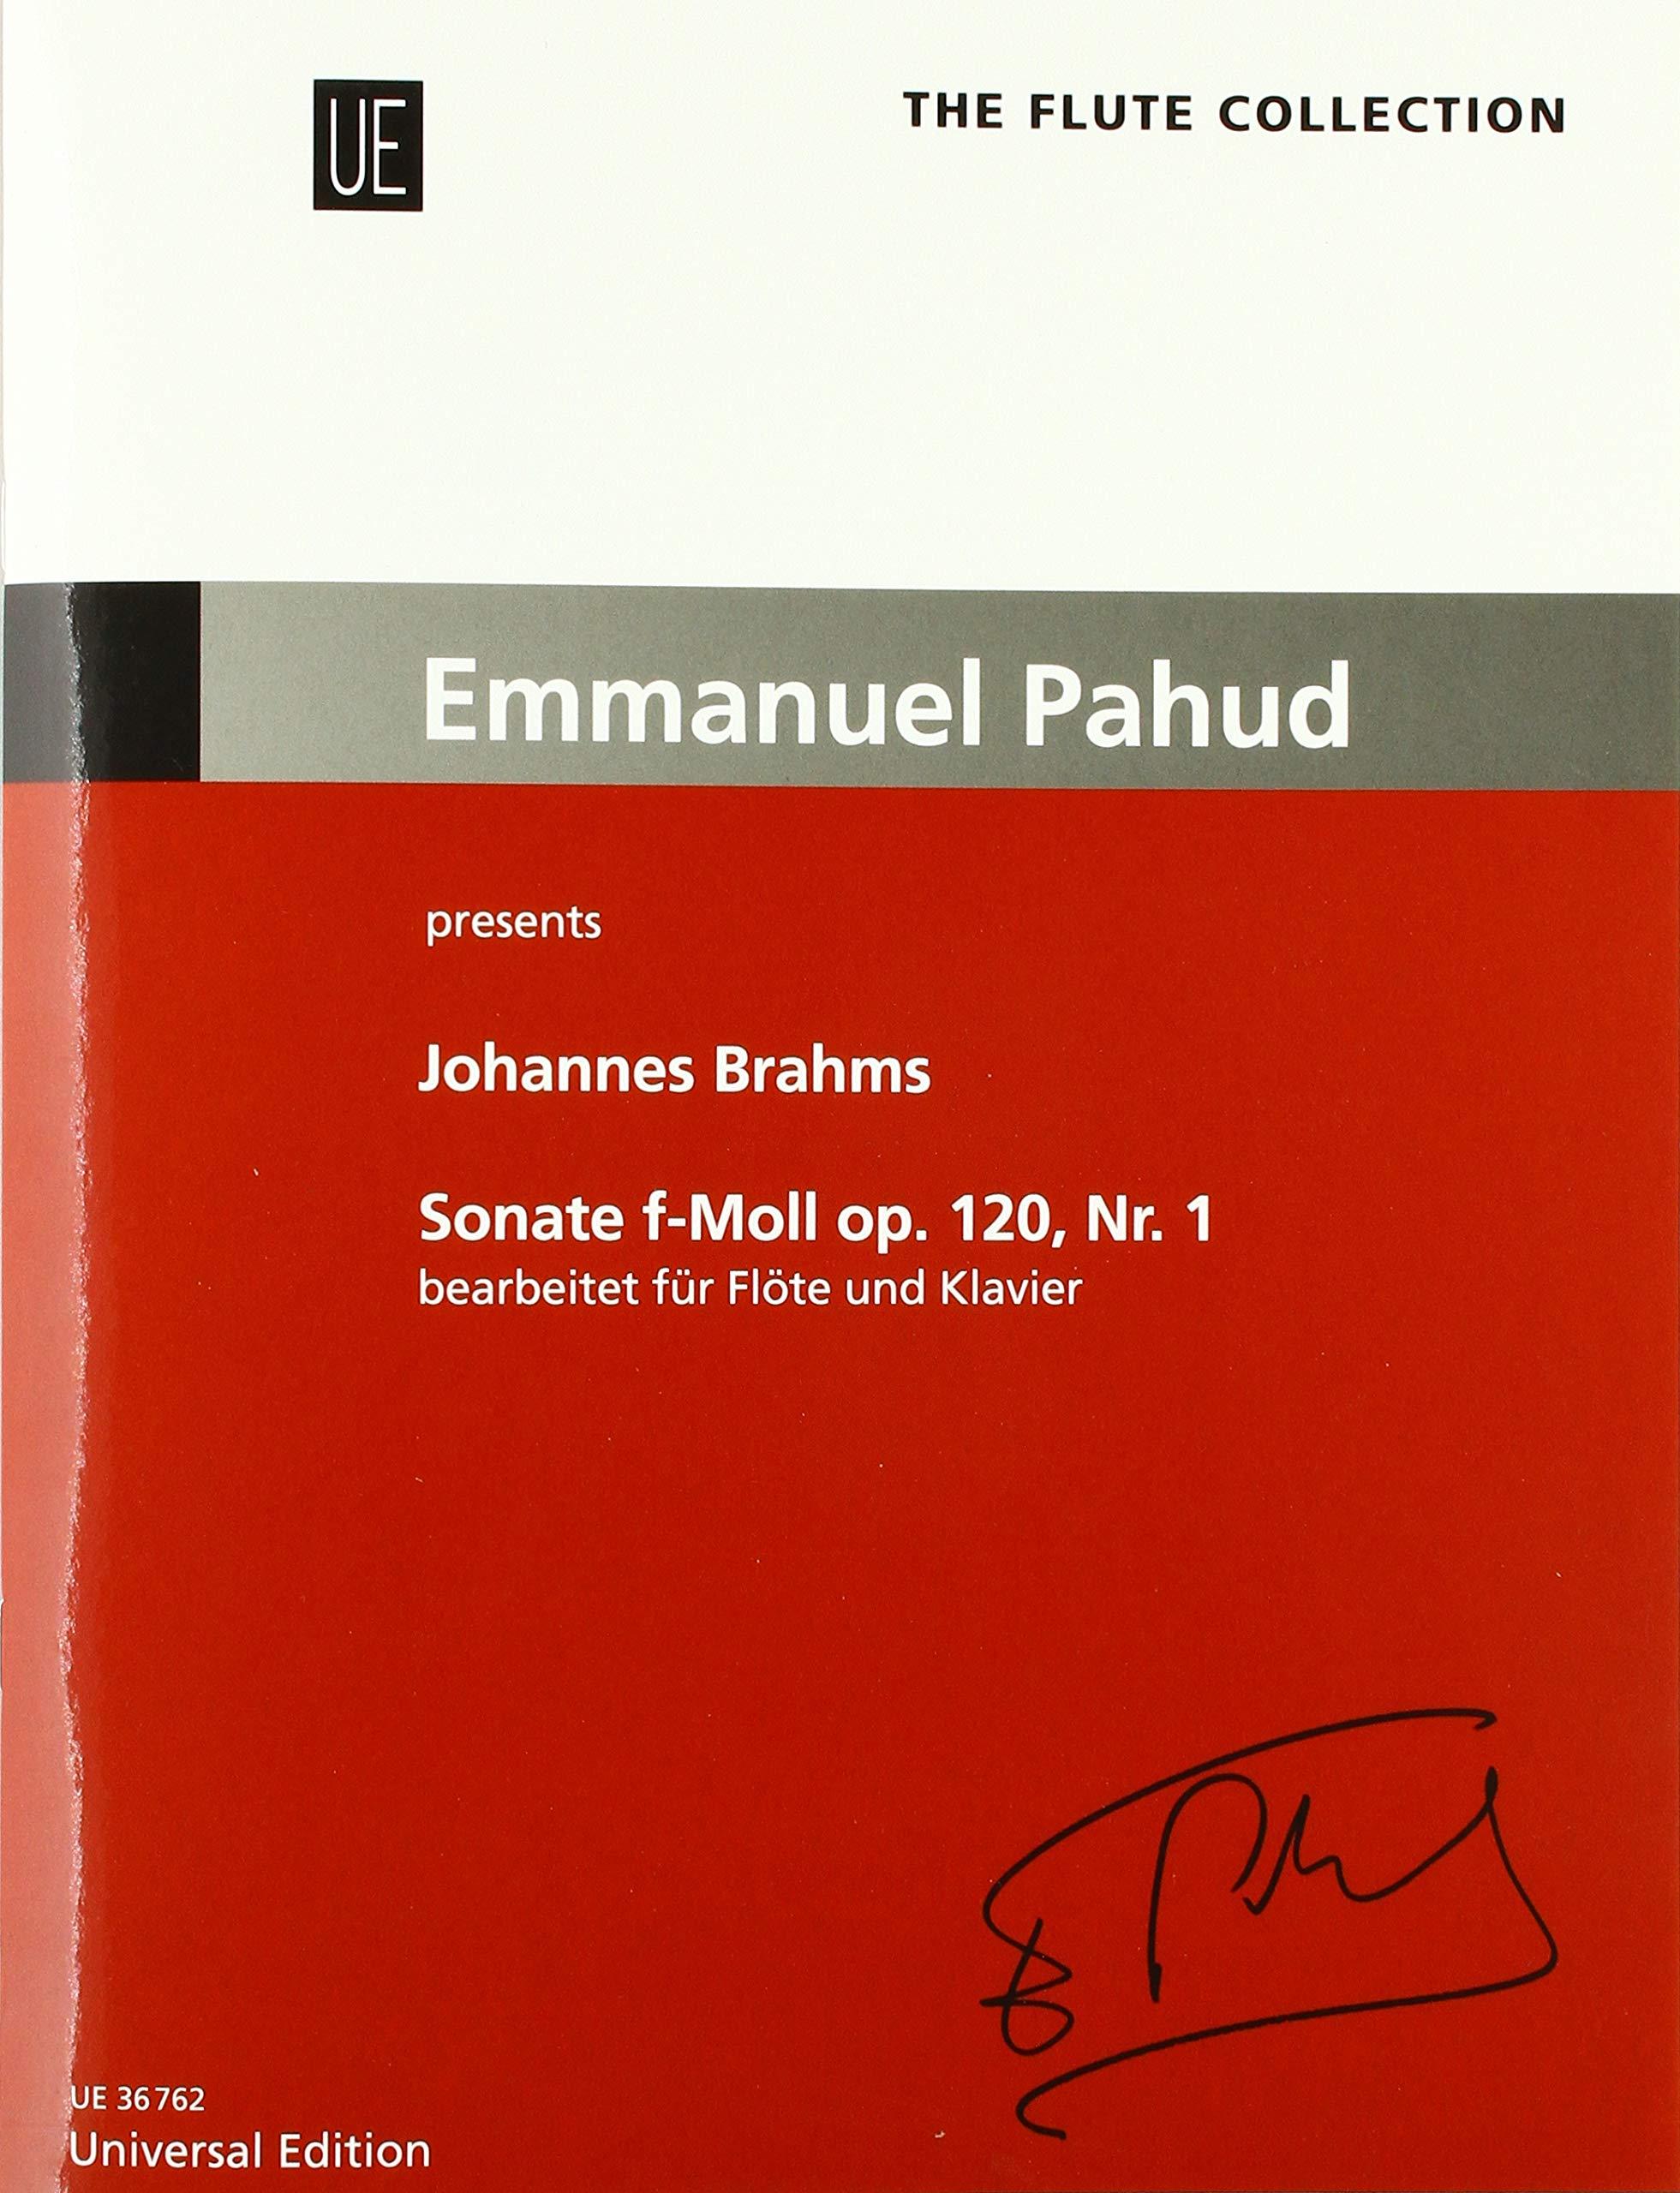 Sonate in f-moll op.120, N.1, Emmanuel Pahud Presents - Johannes Brahms | Suono Flauti